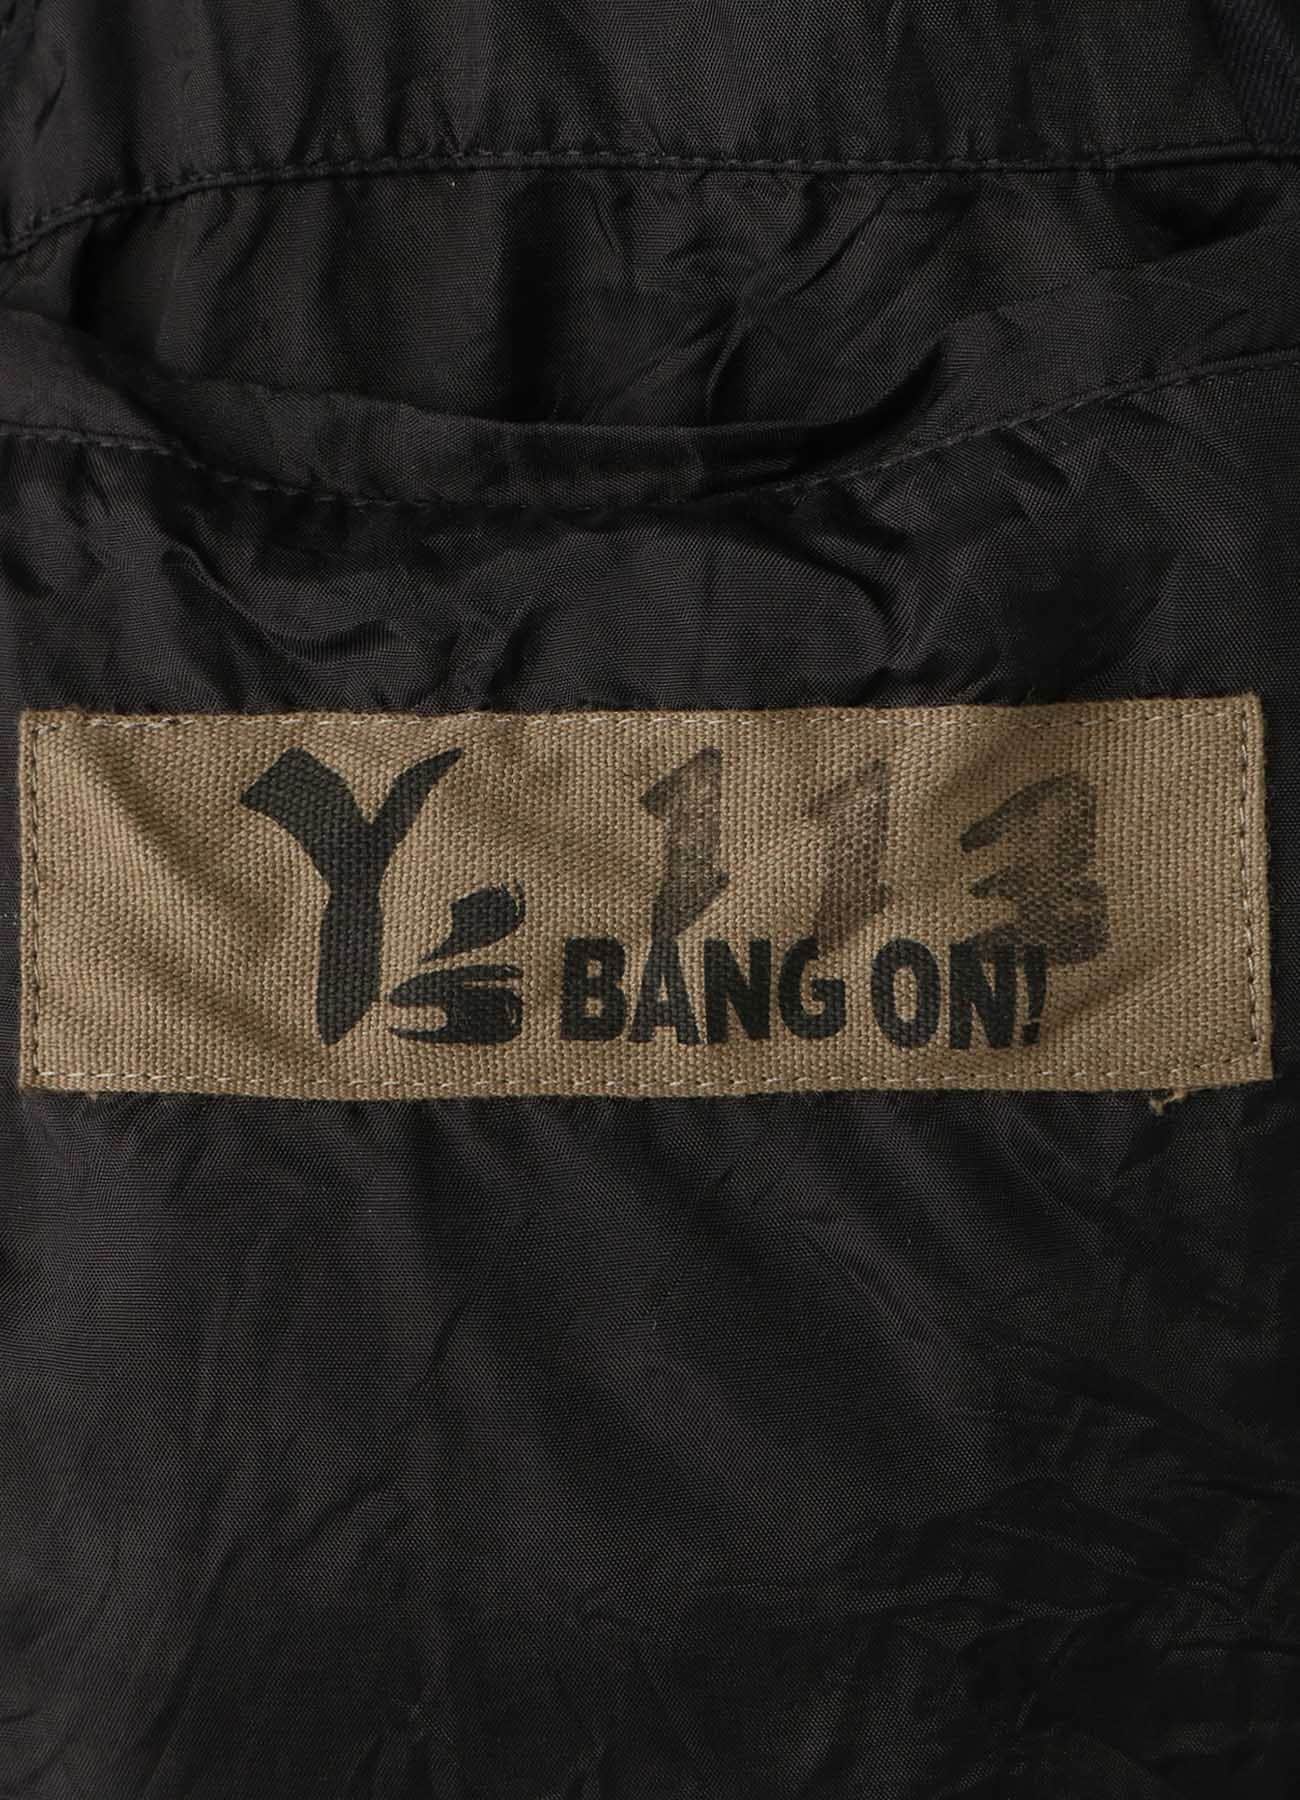 Y's BANG ON!No.113 NAVY-Coat Light ounces denim(XS Black): Vintage 